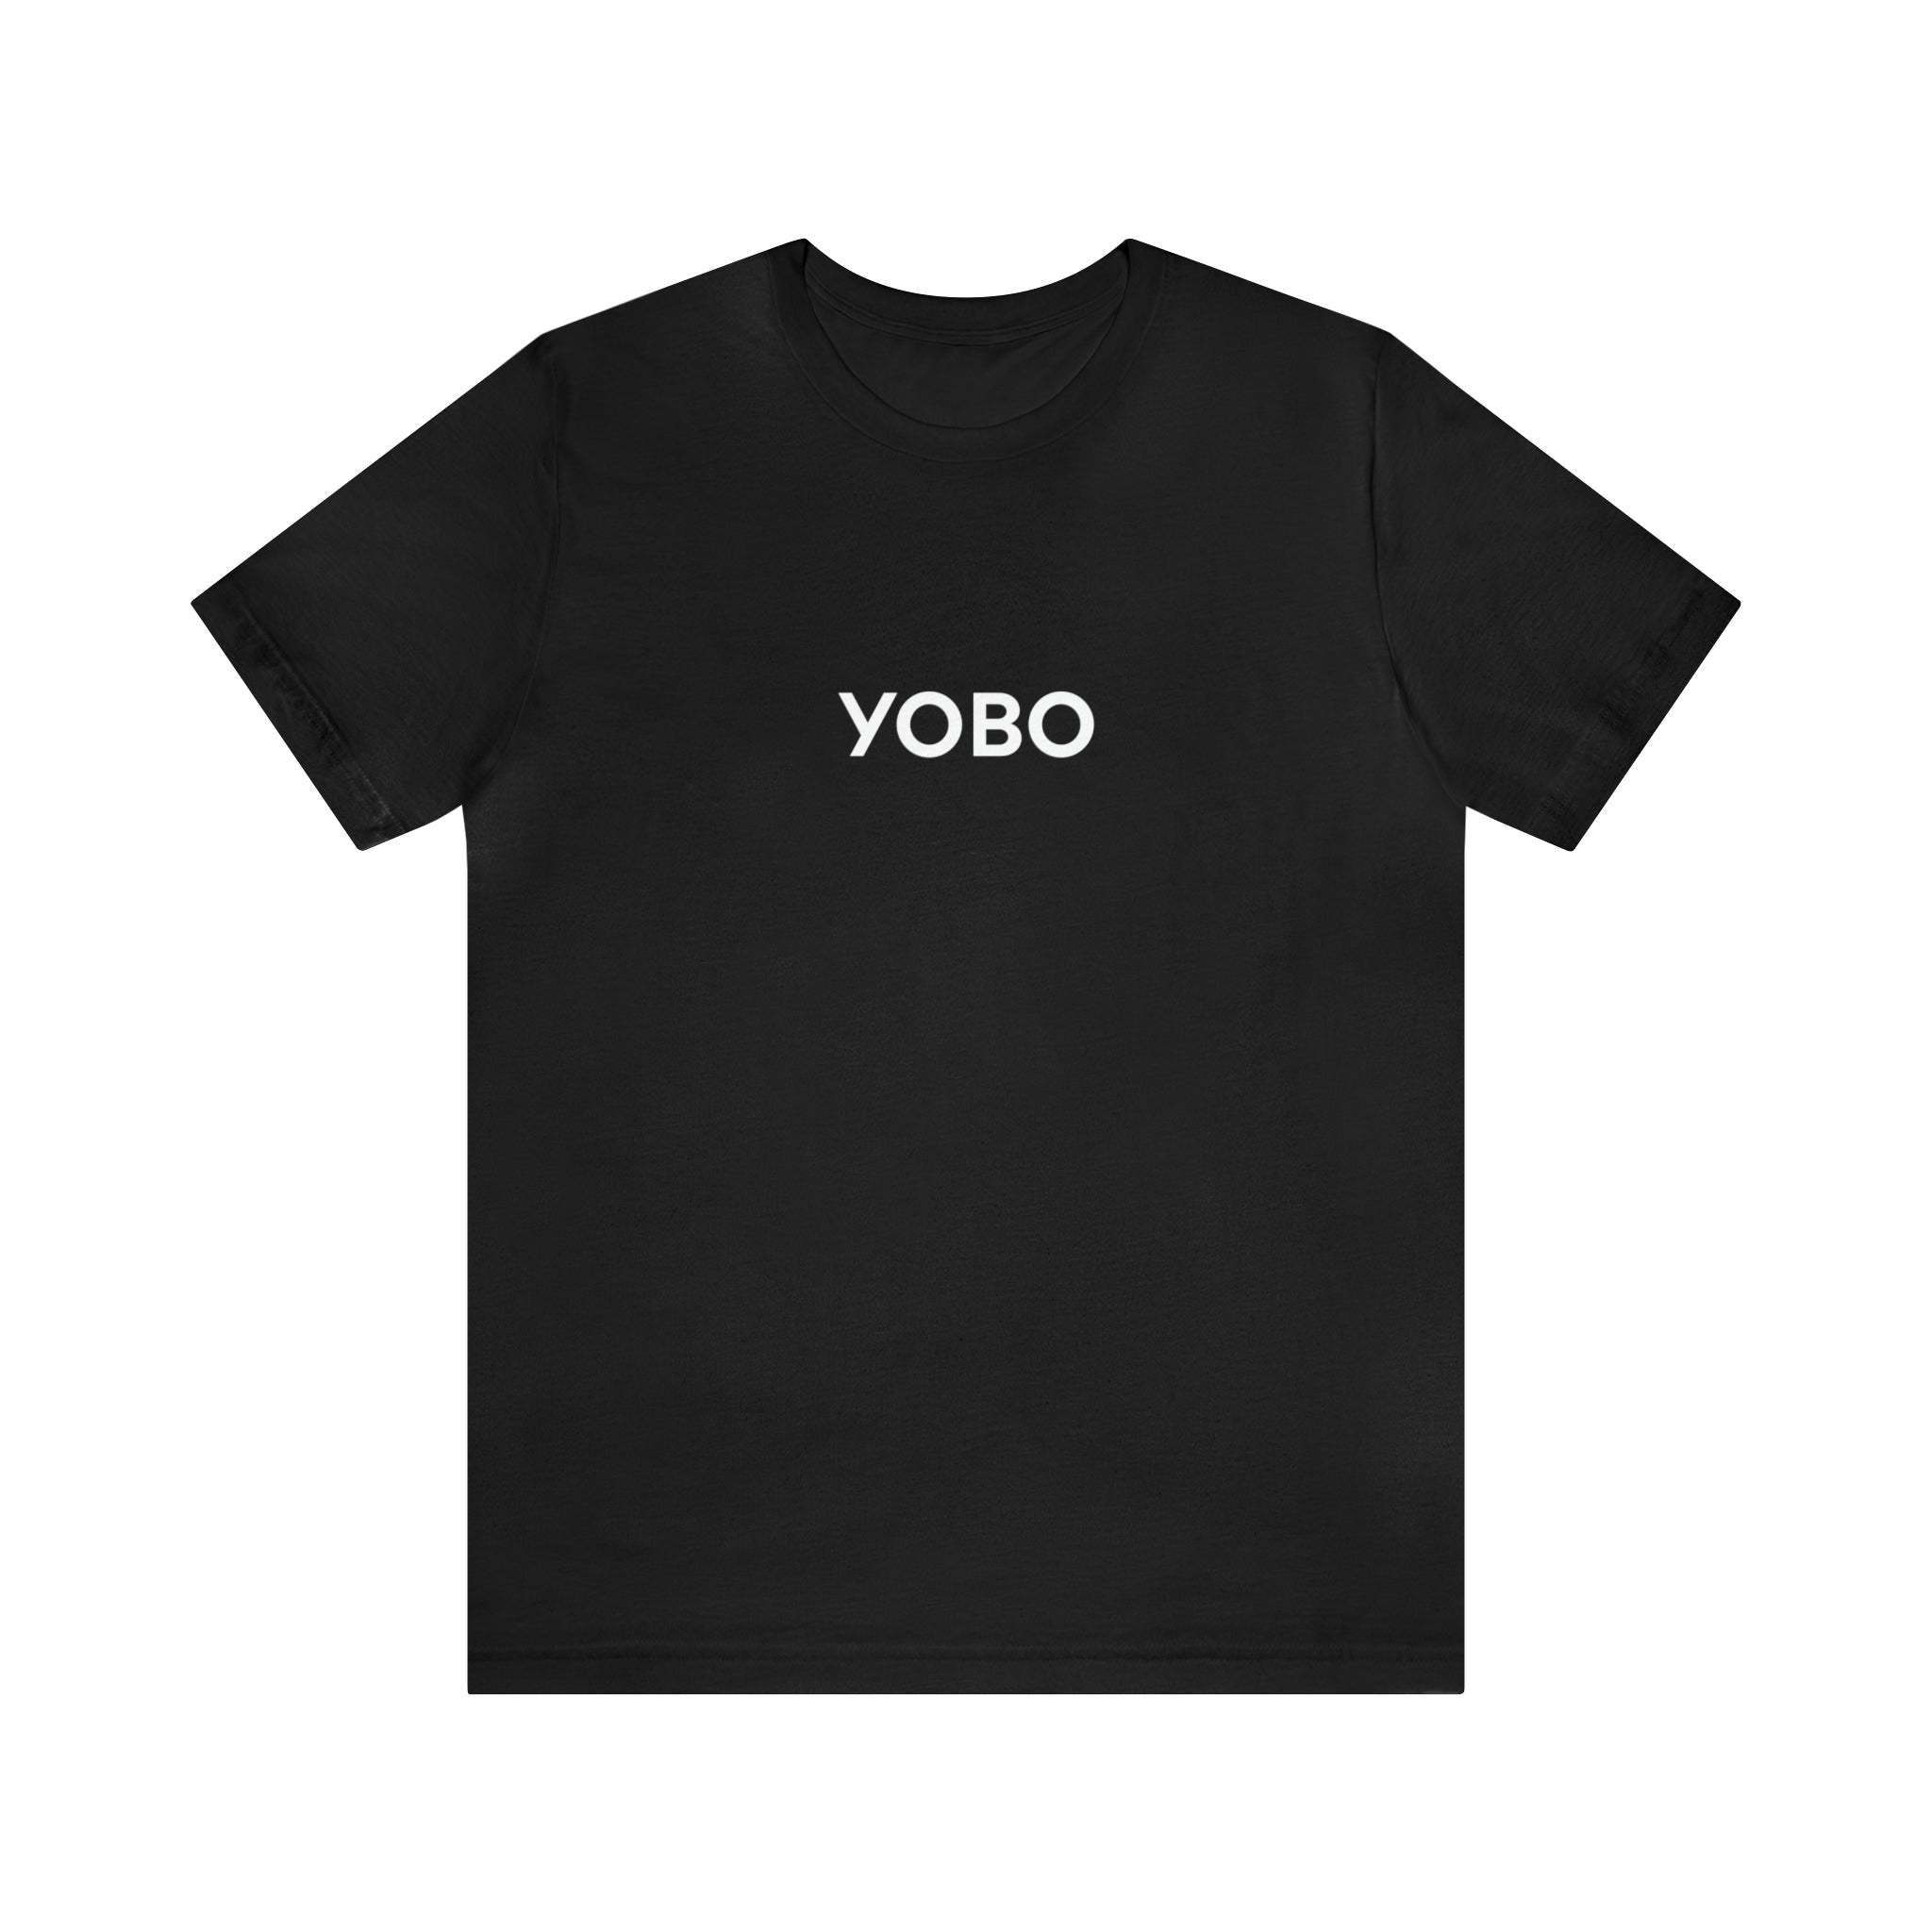 Yobo Short Sleeve T-Shirt in Black